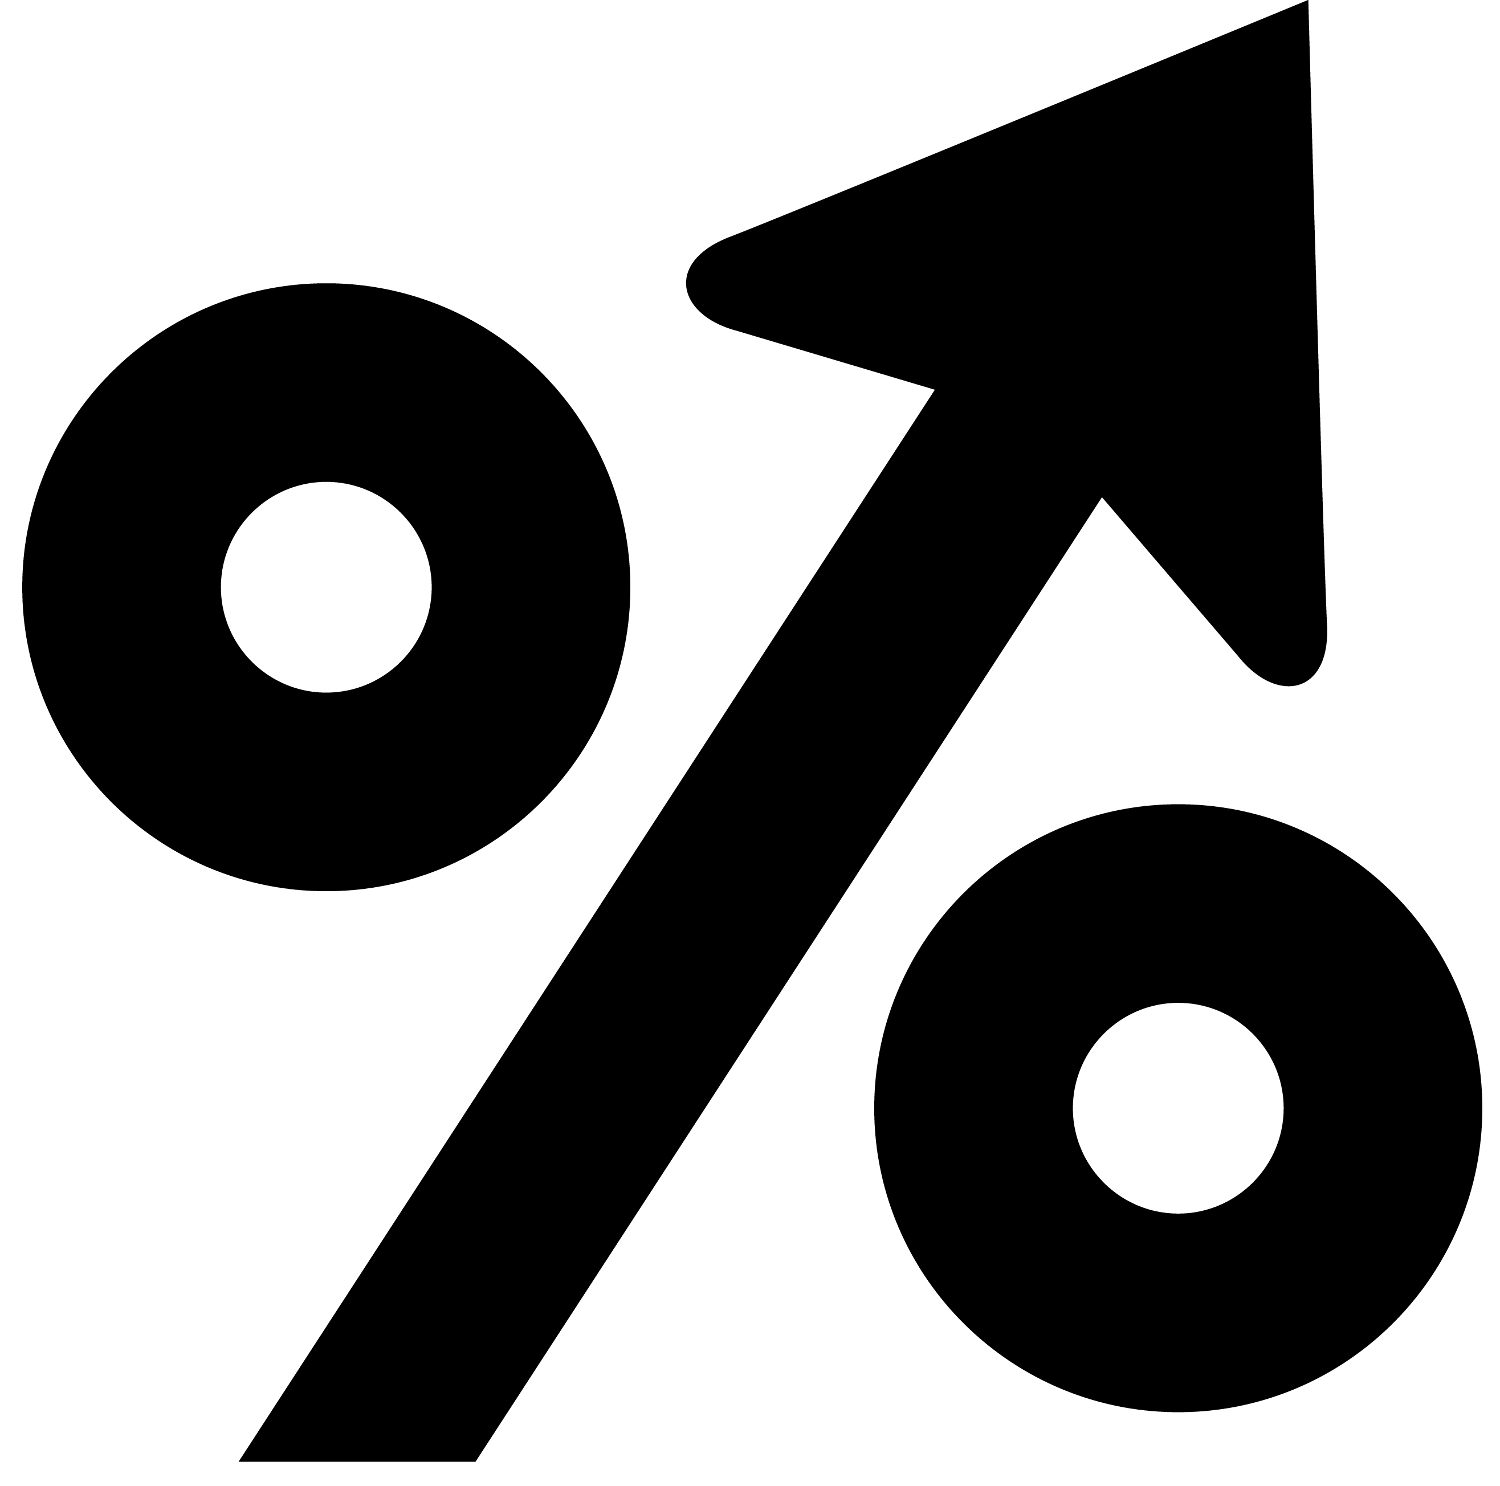 Percent increase odapo